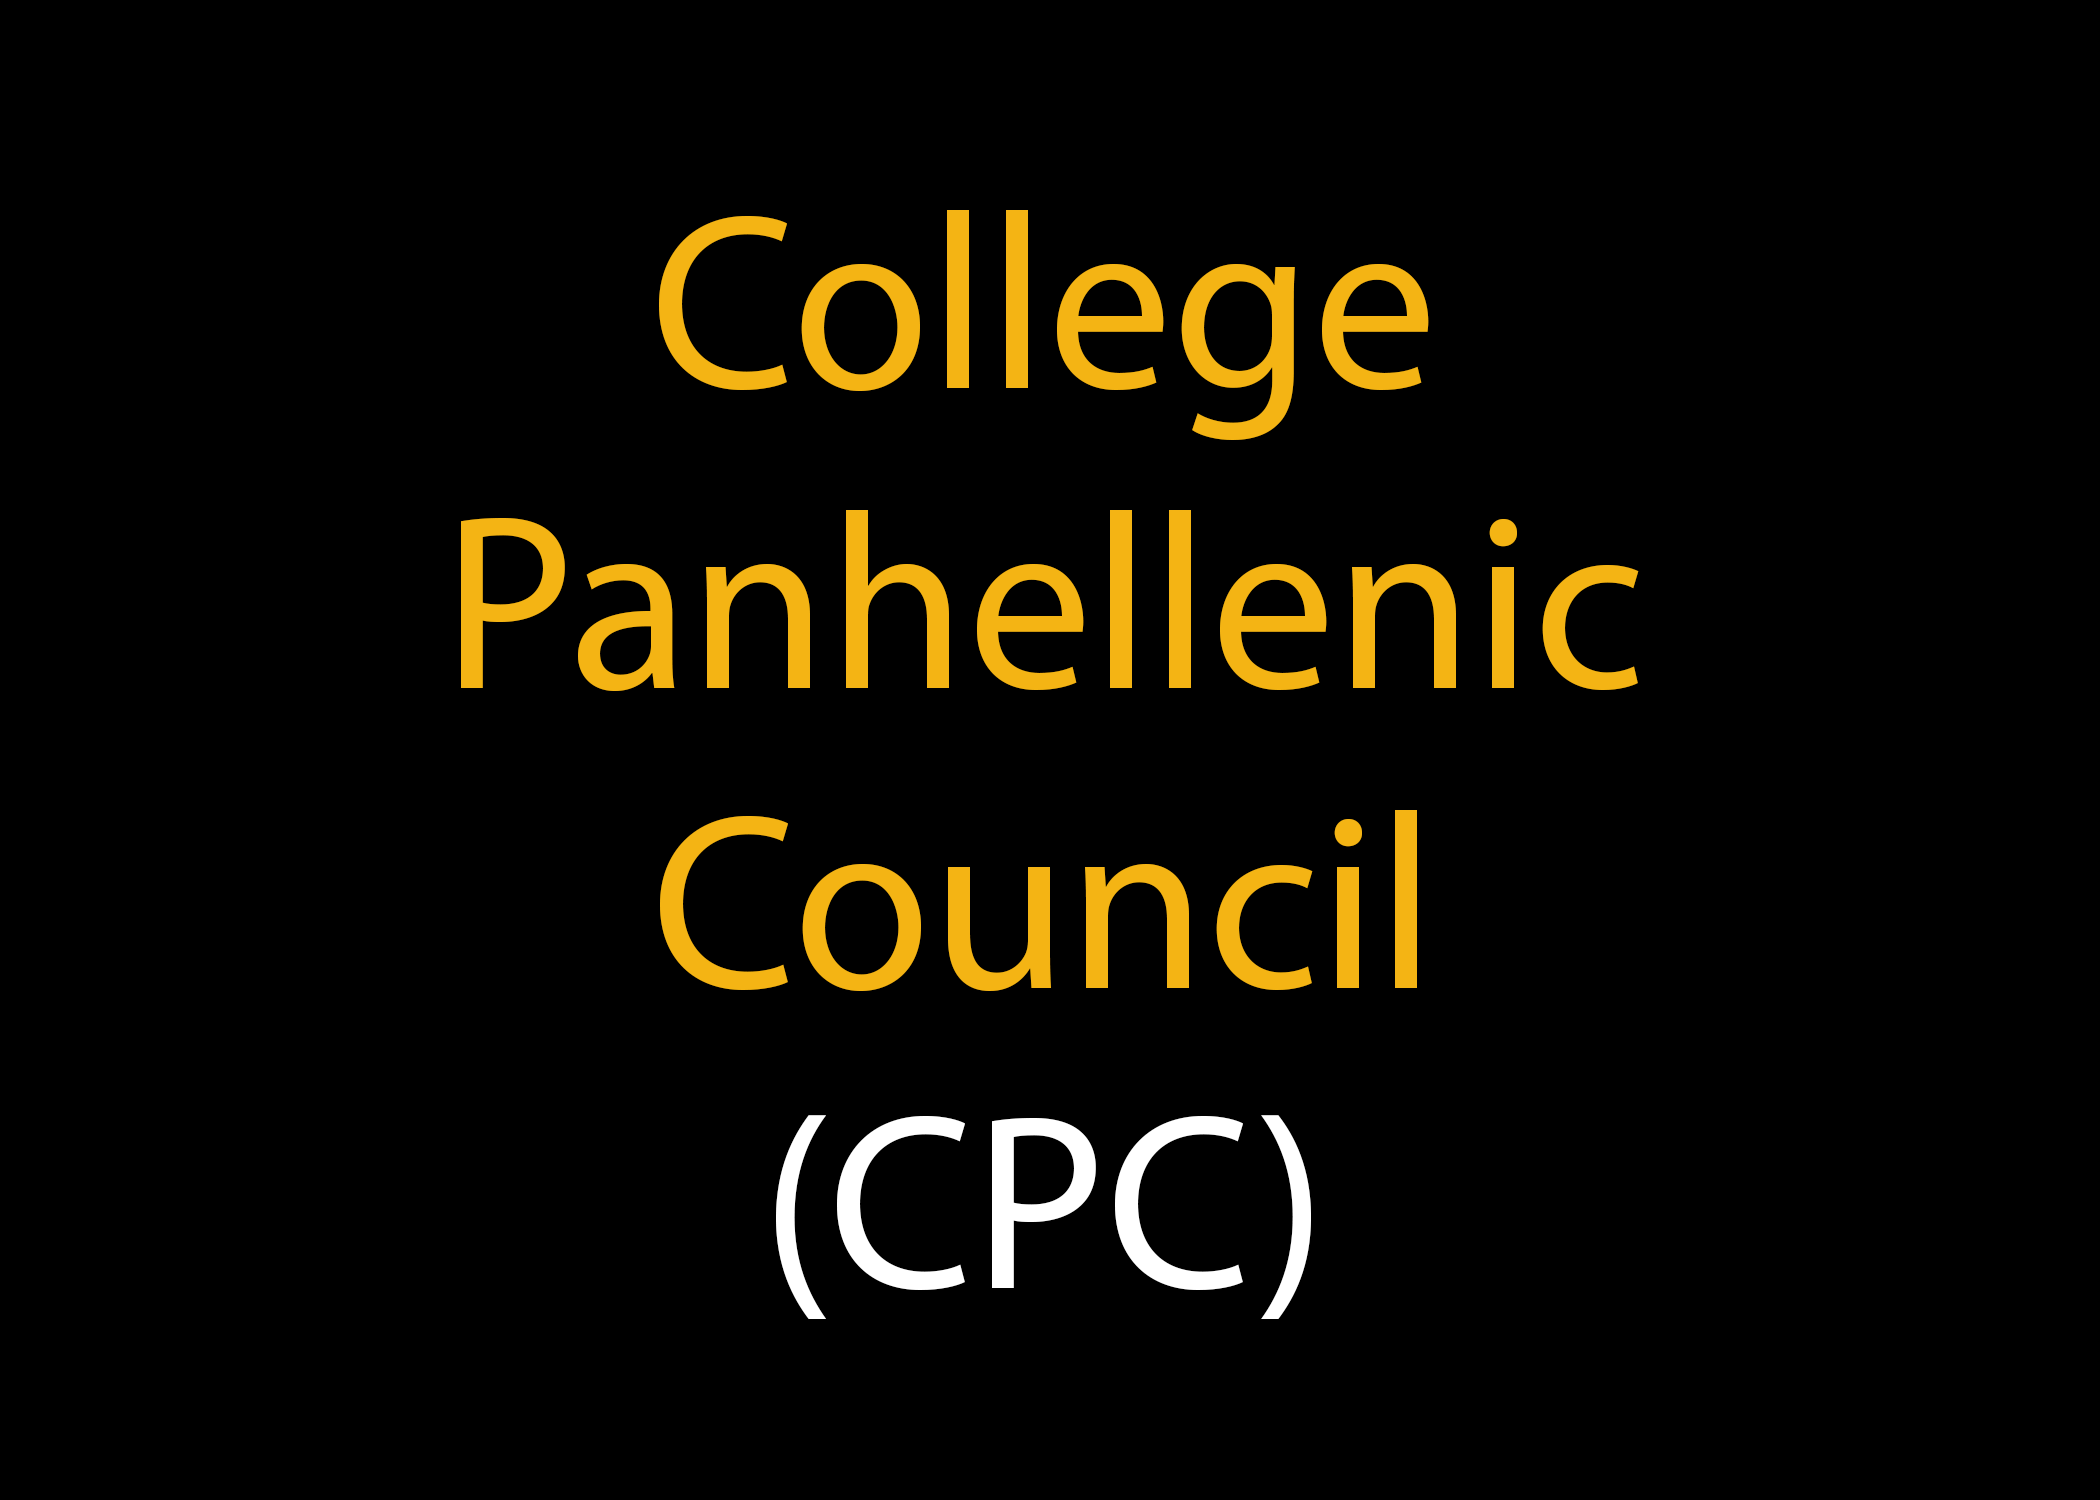 College Panhellenic Council (CPC)